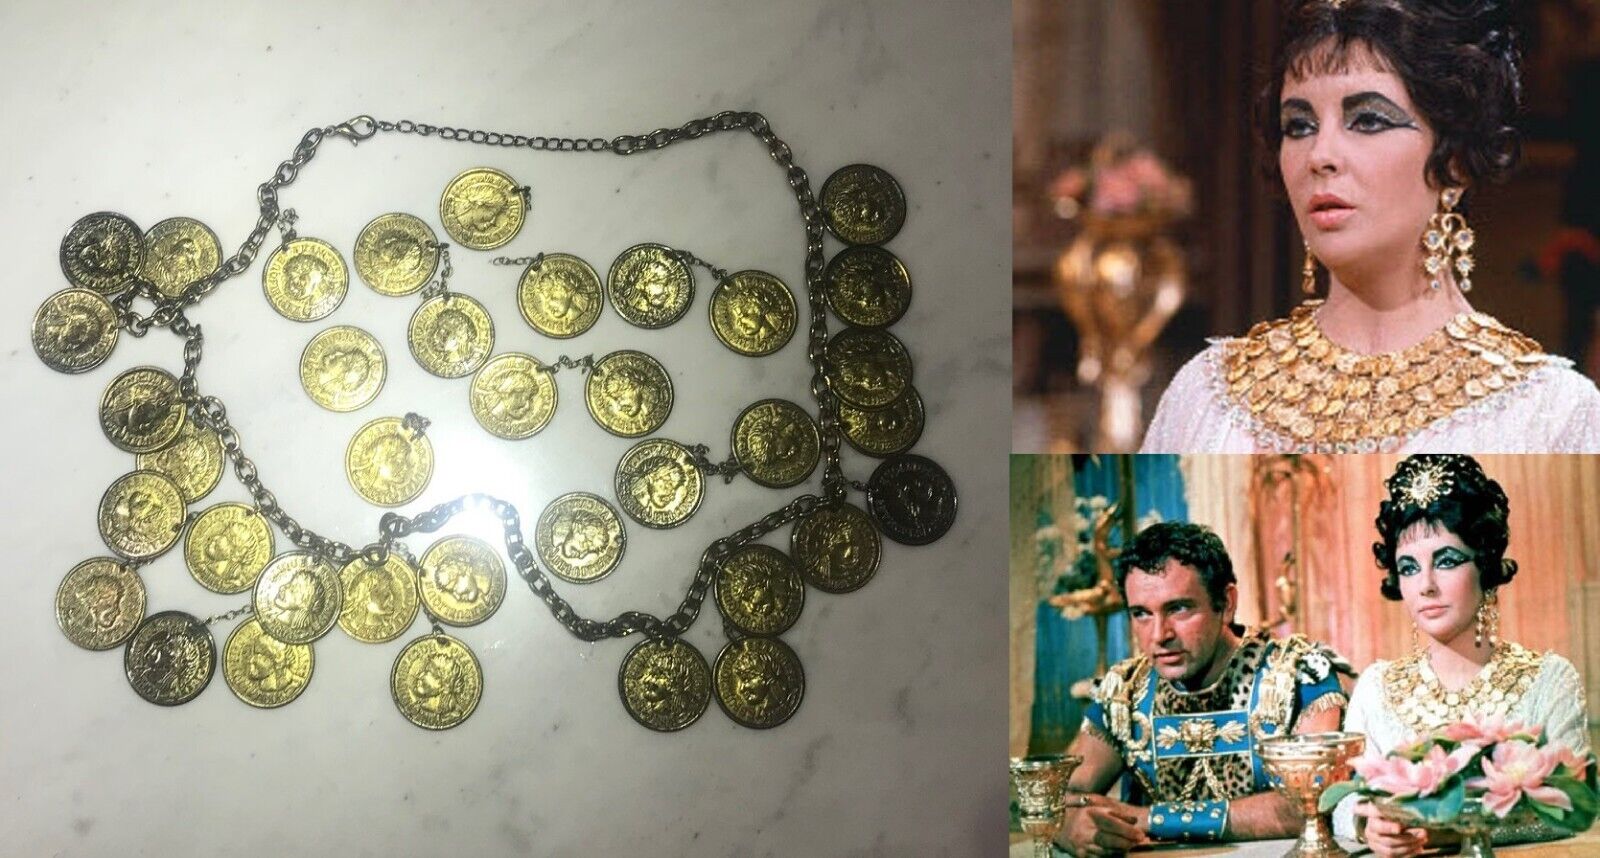 MGM Gold Coin Necklace Jewelry Cleopatra movie prop costume Julius Caesar Aureus